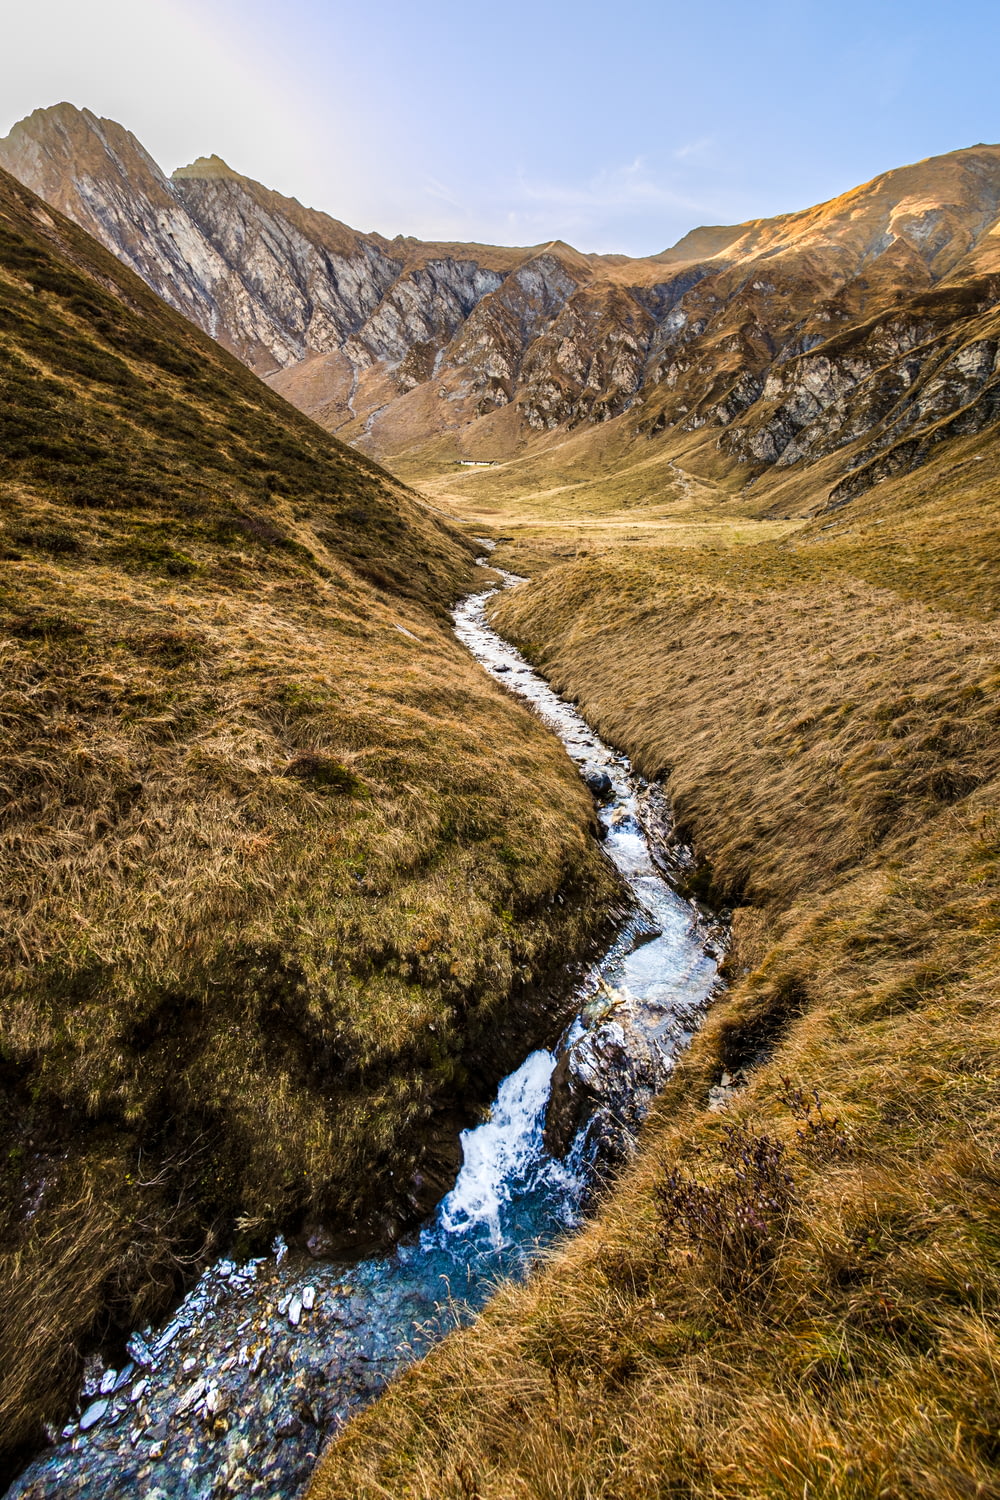 a stream running through a grass covered valley